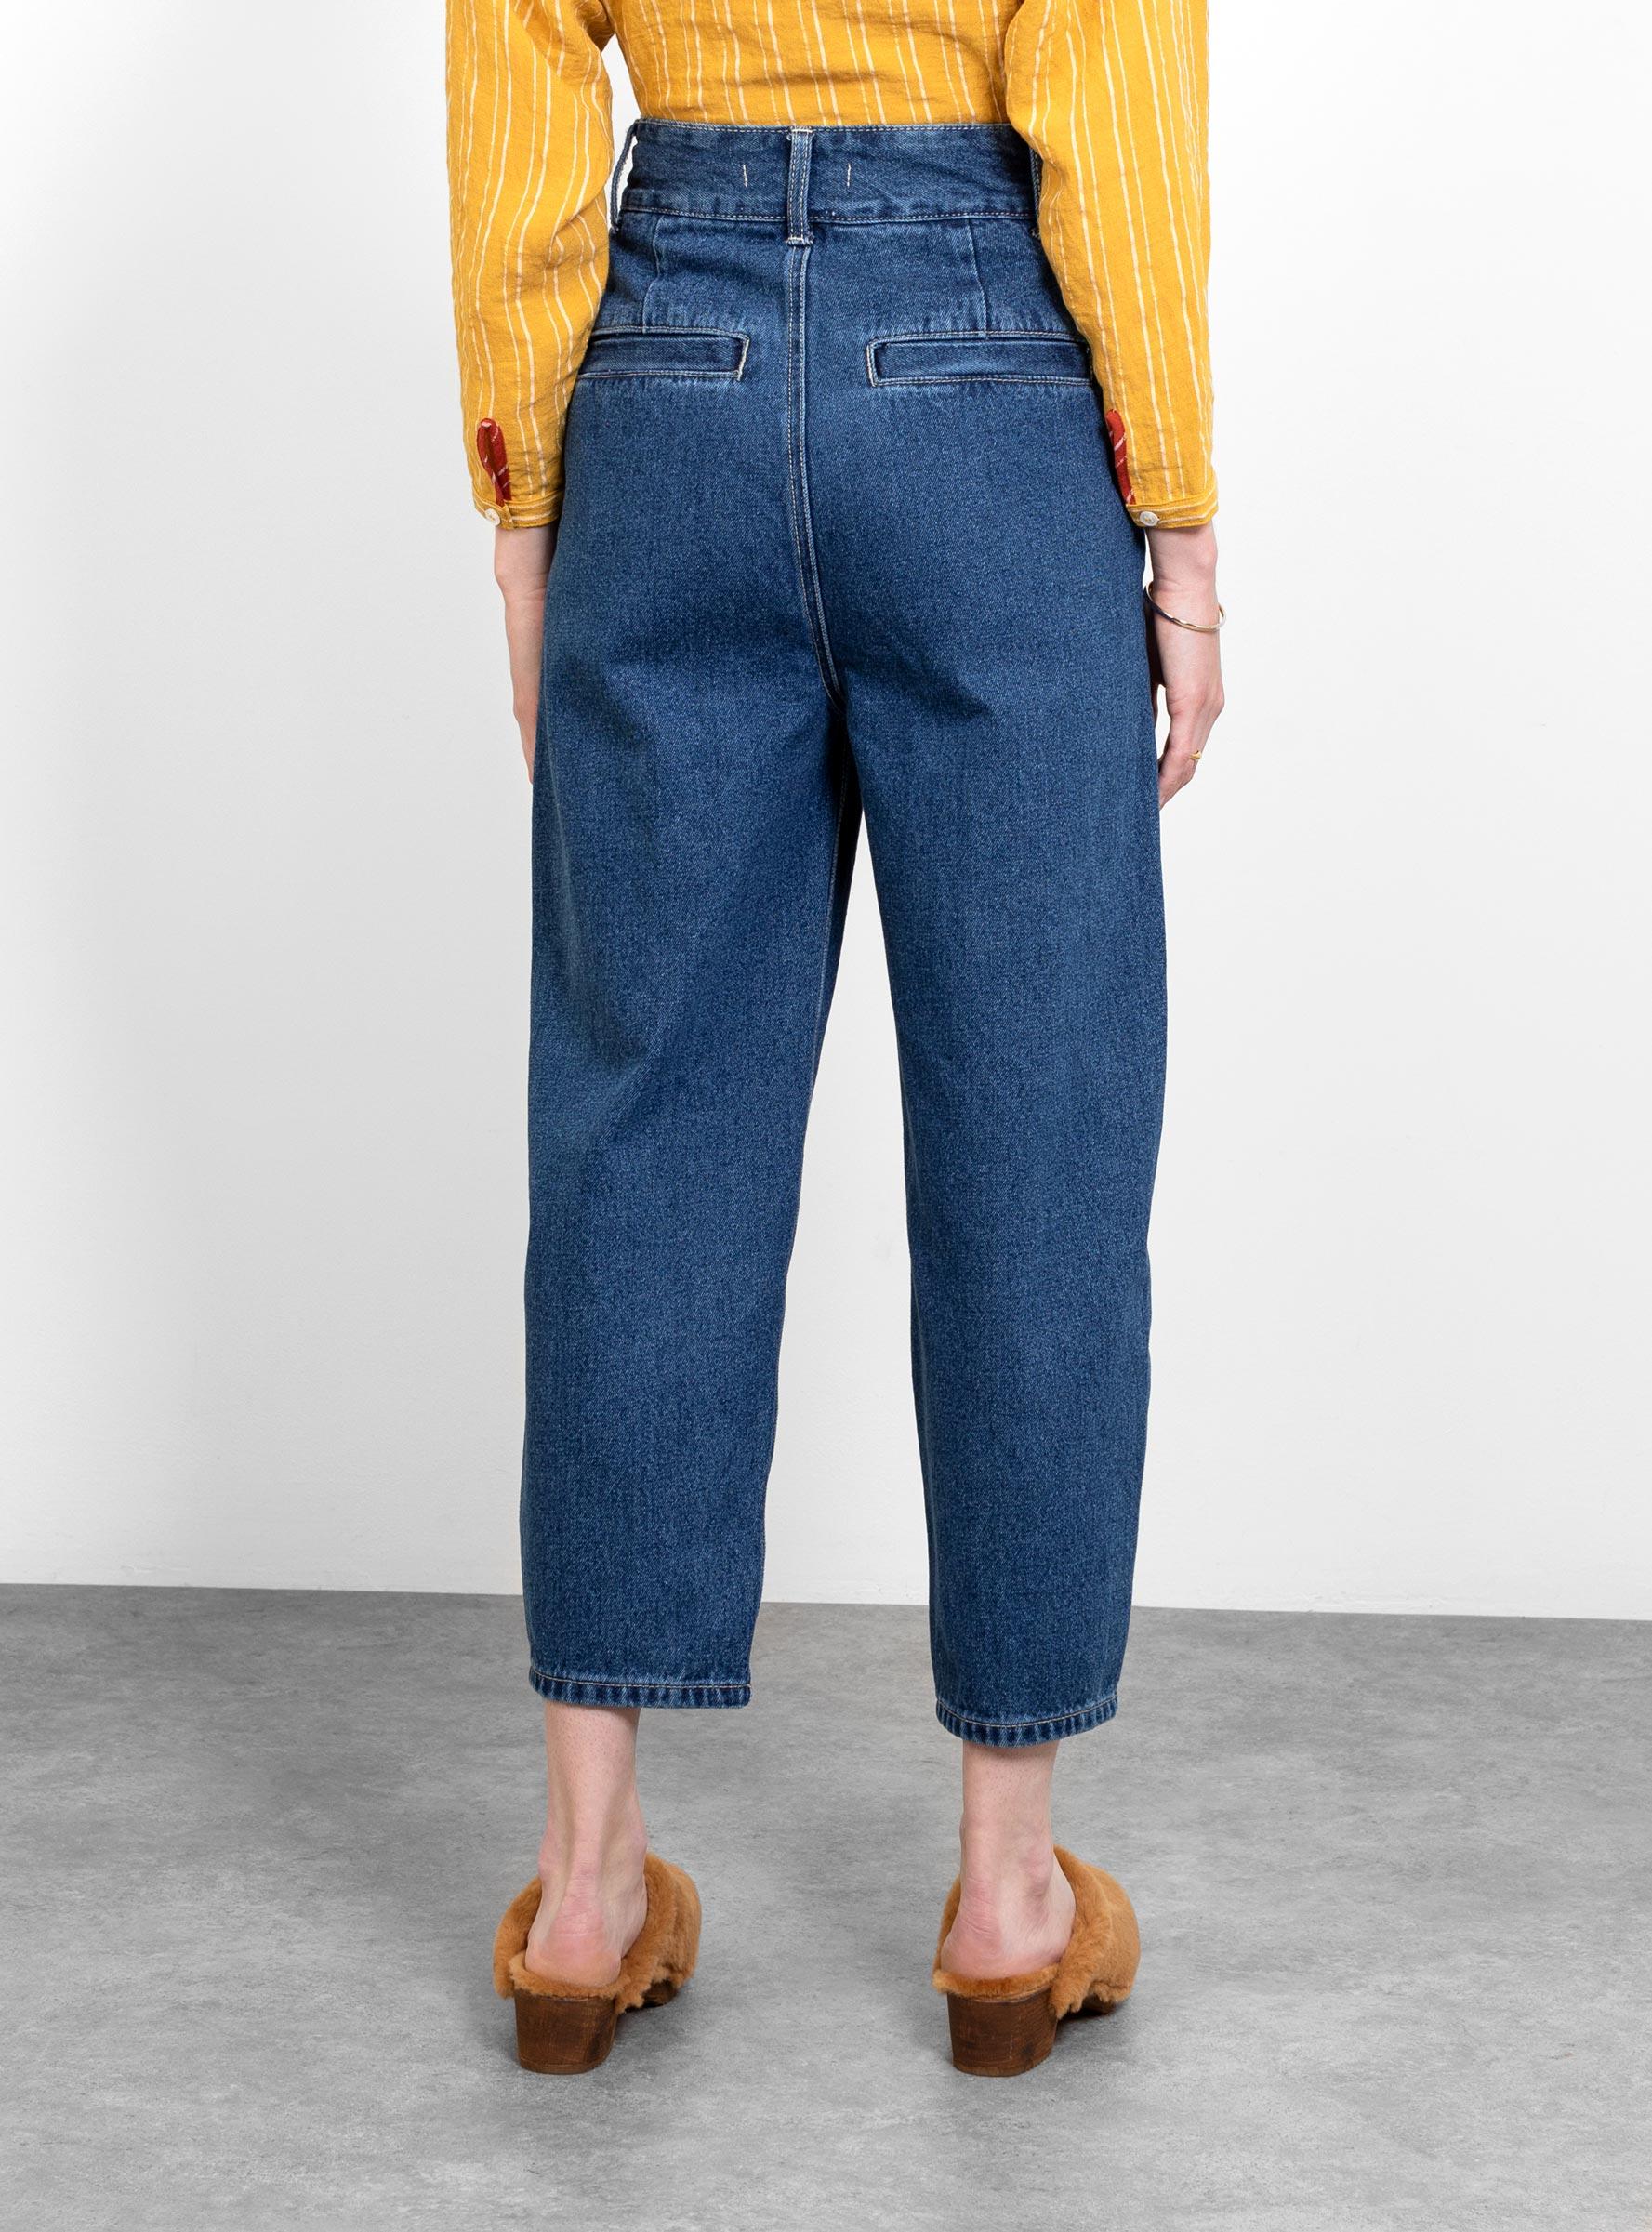 SIDELINE Denim Dover Jeans in Blue - Lyst